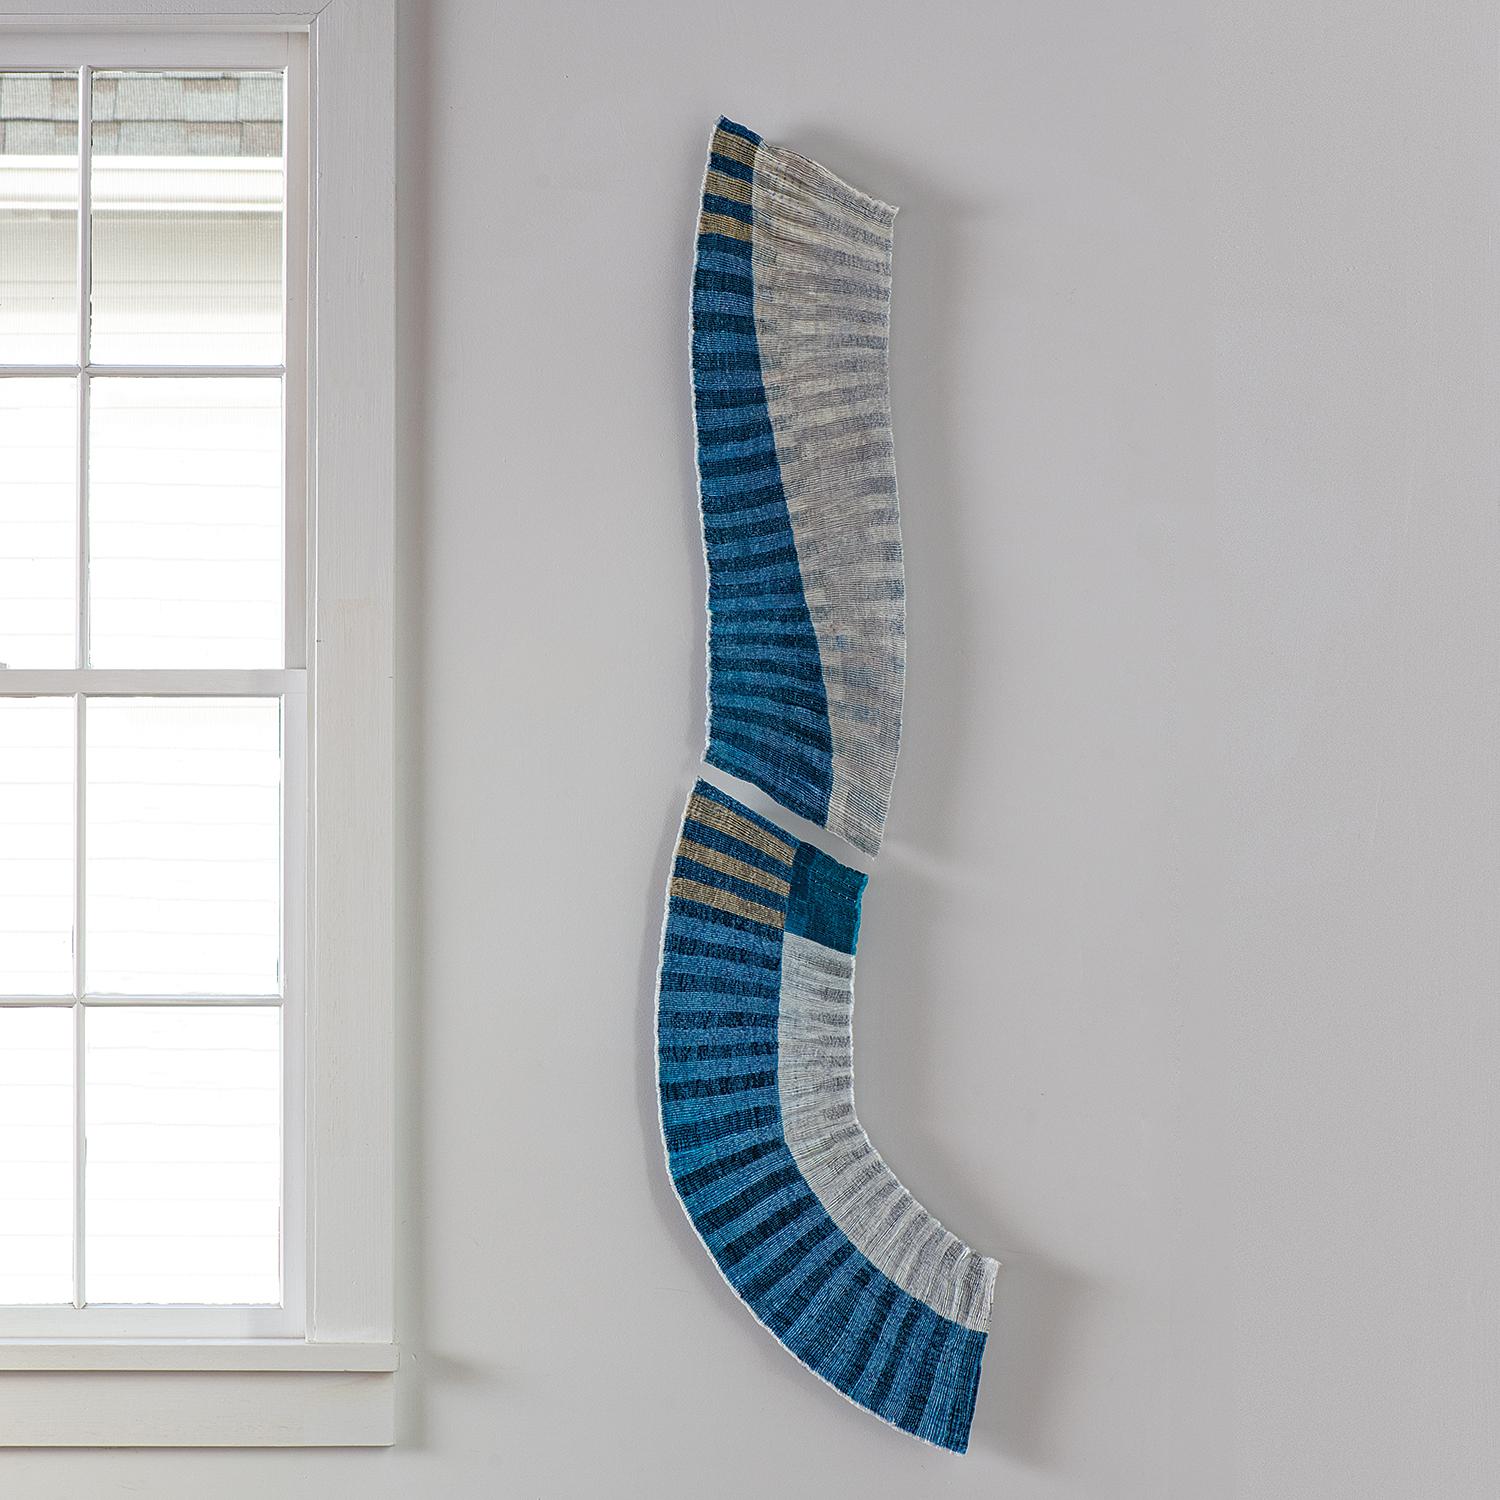 Meeting Point, Caroline Bartlett, Contemporary Abstract Textile Wall Sculpture